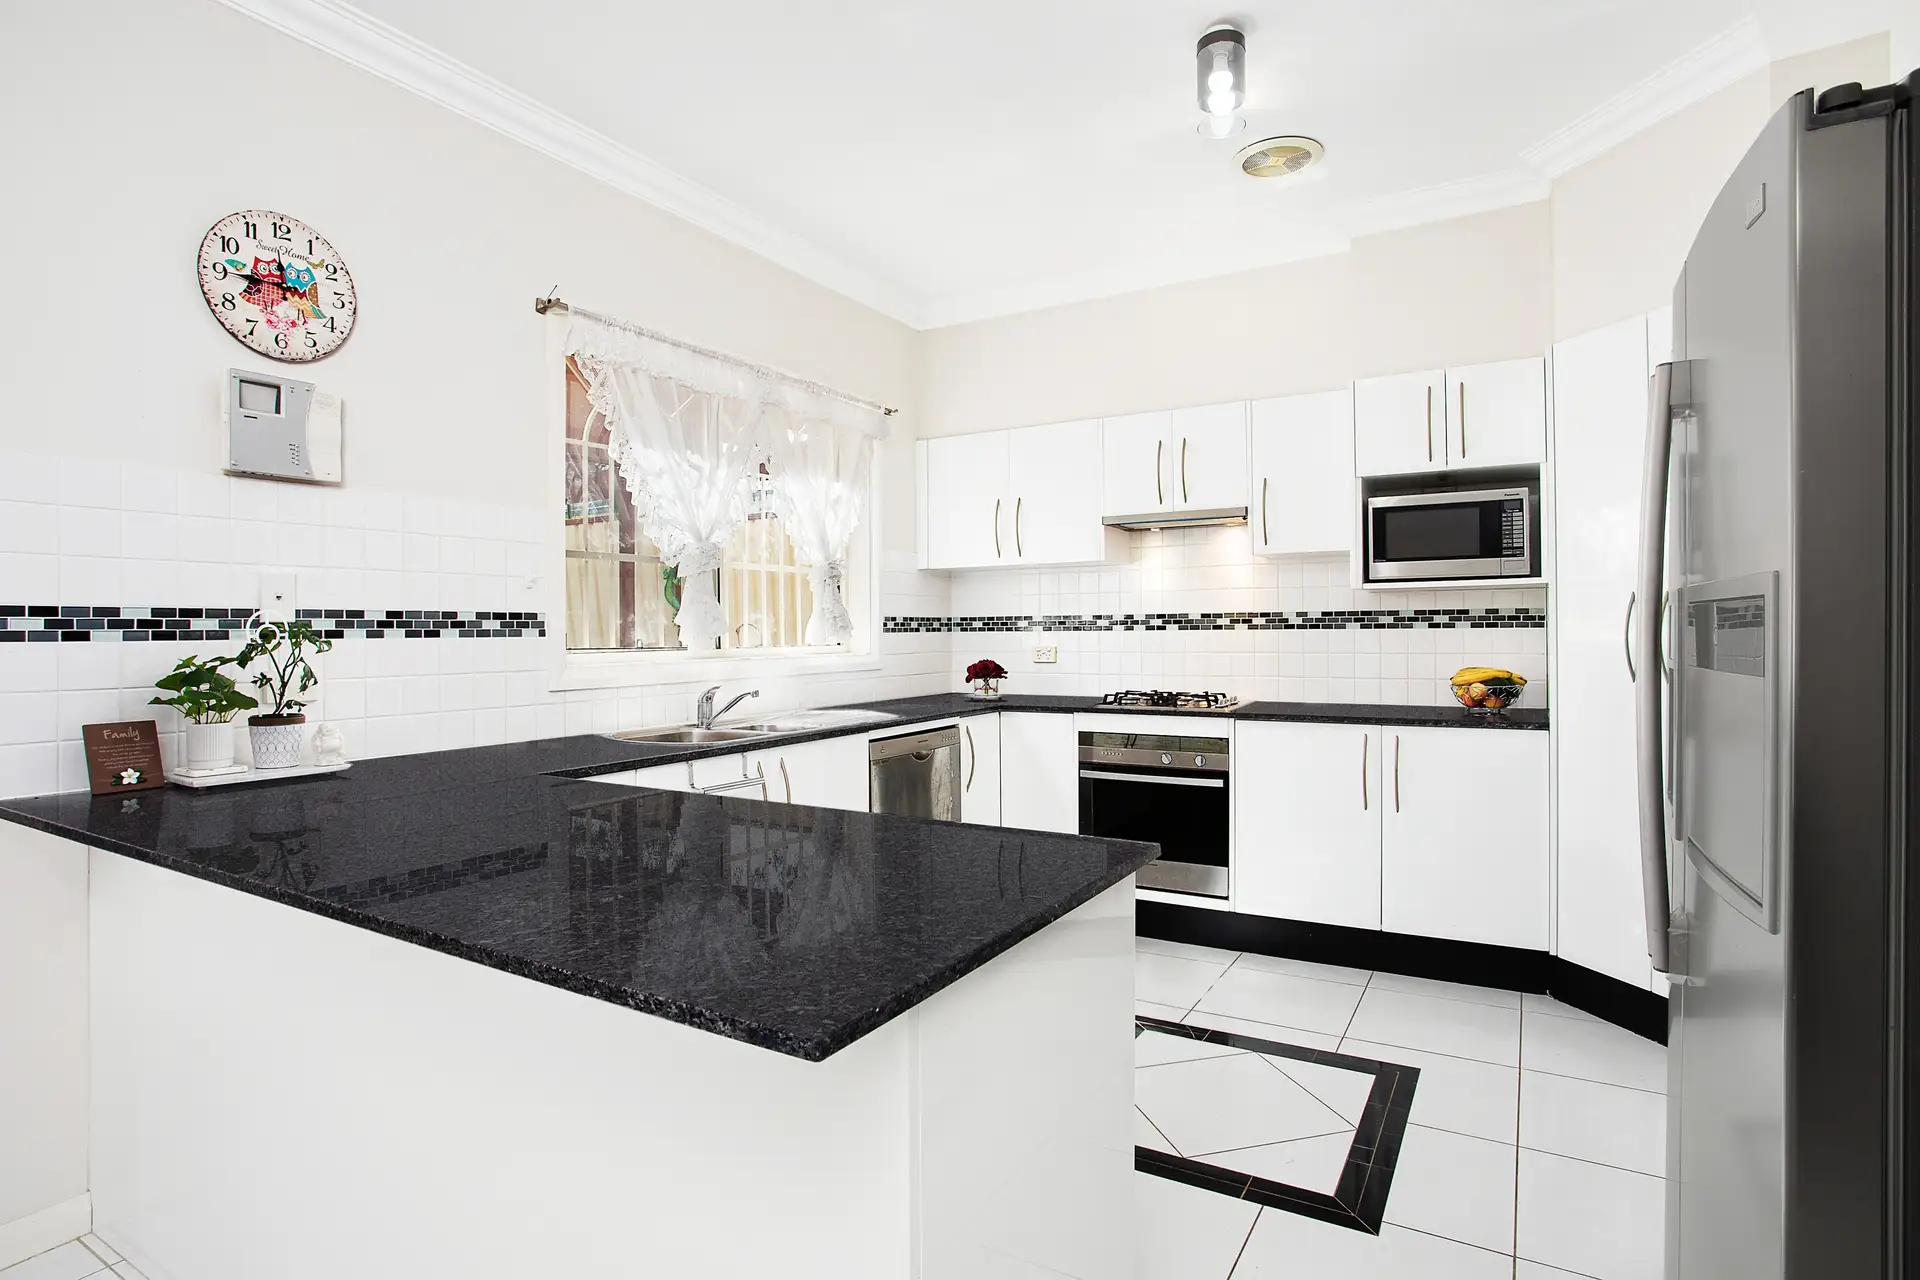 59 Dean Street, Strathfield South Sold by Richard Matthews Real Estate - image 7